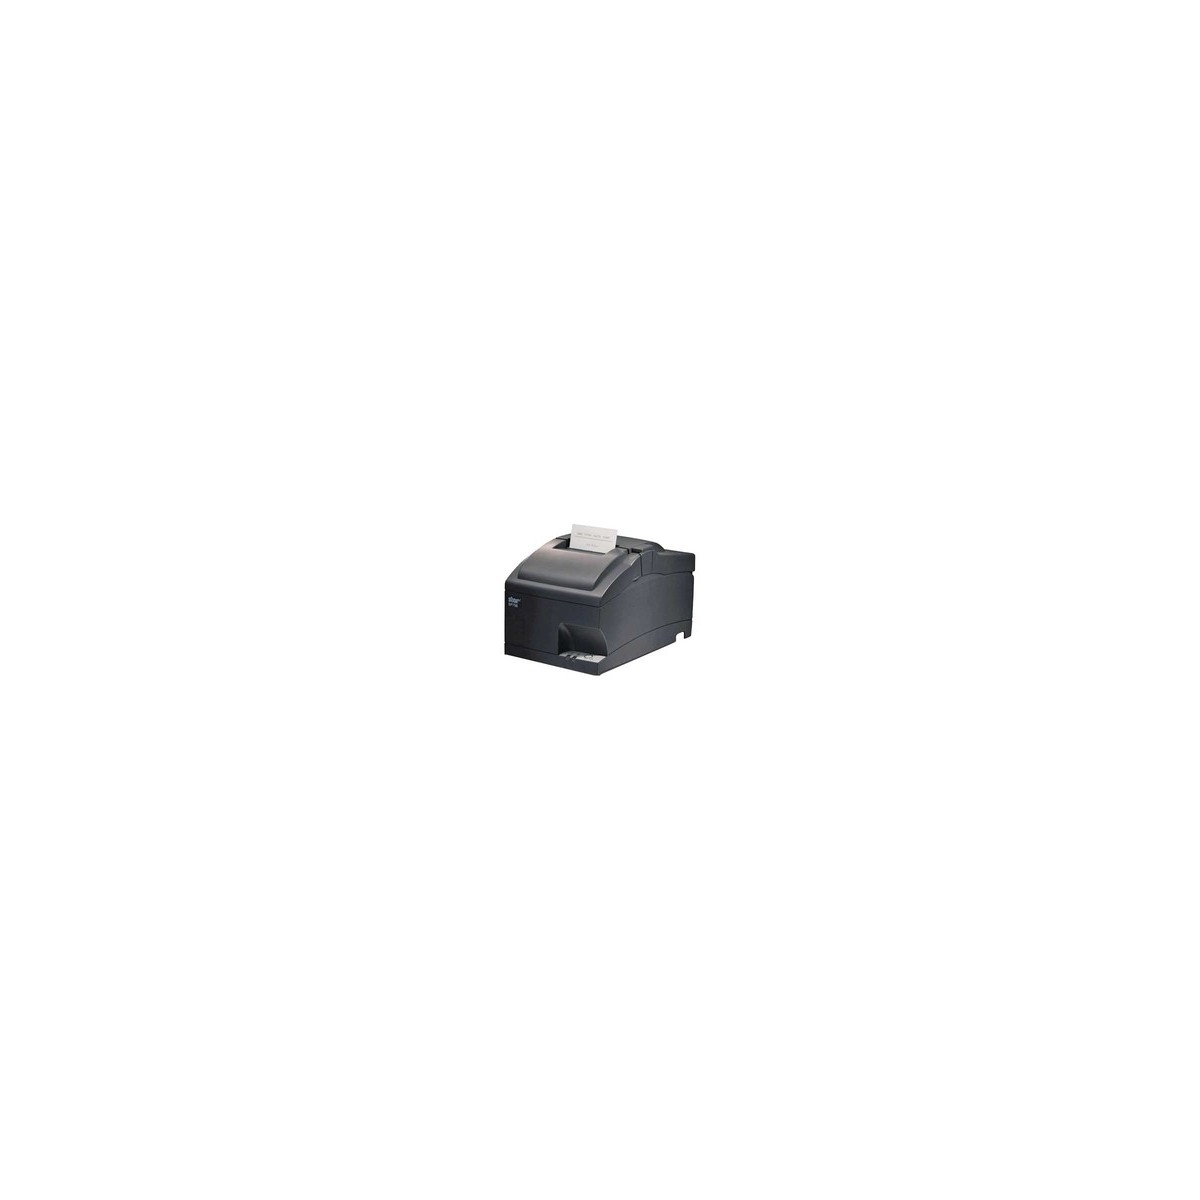 Star Micronics SP700 - Dot matrix - POS printer - 8.9 lps - 76 mm - Wired - Serial